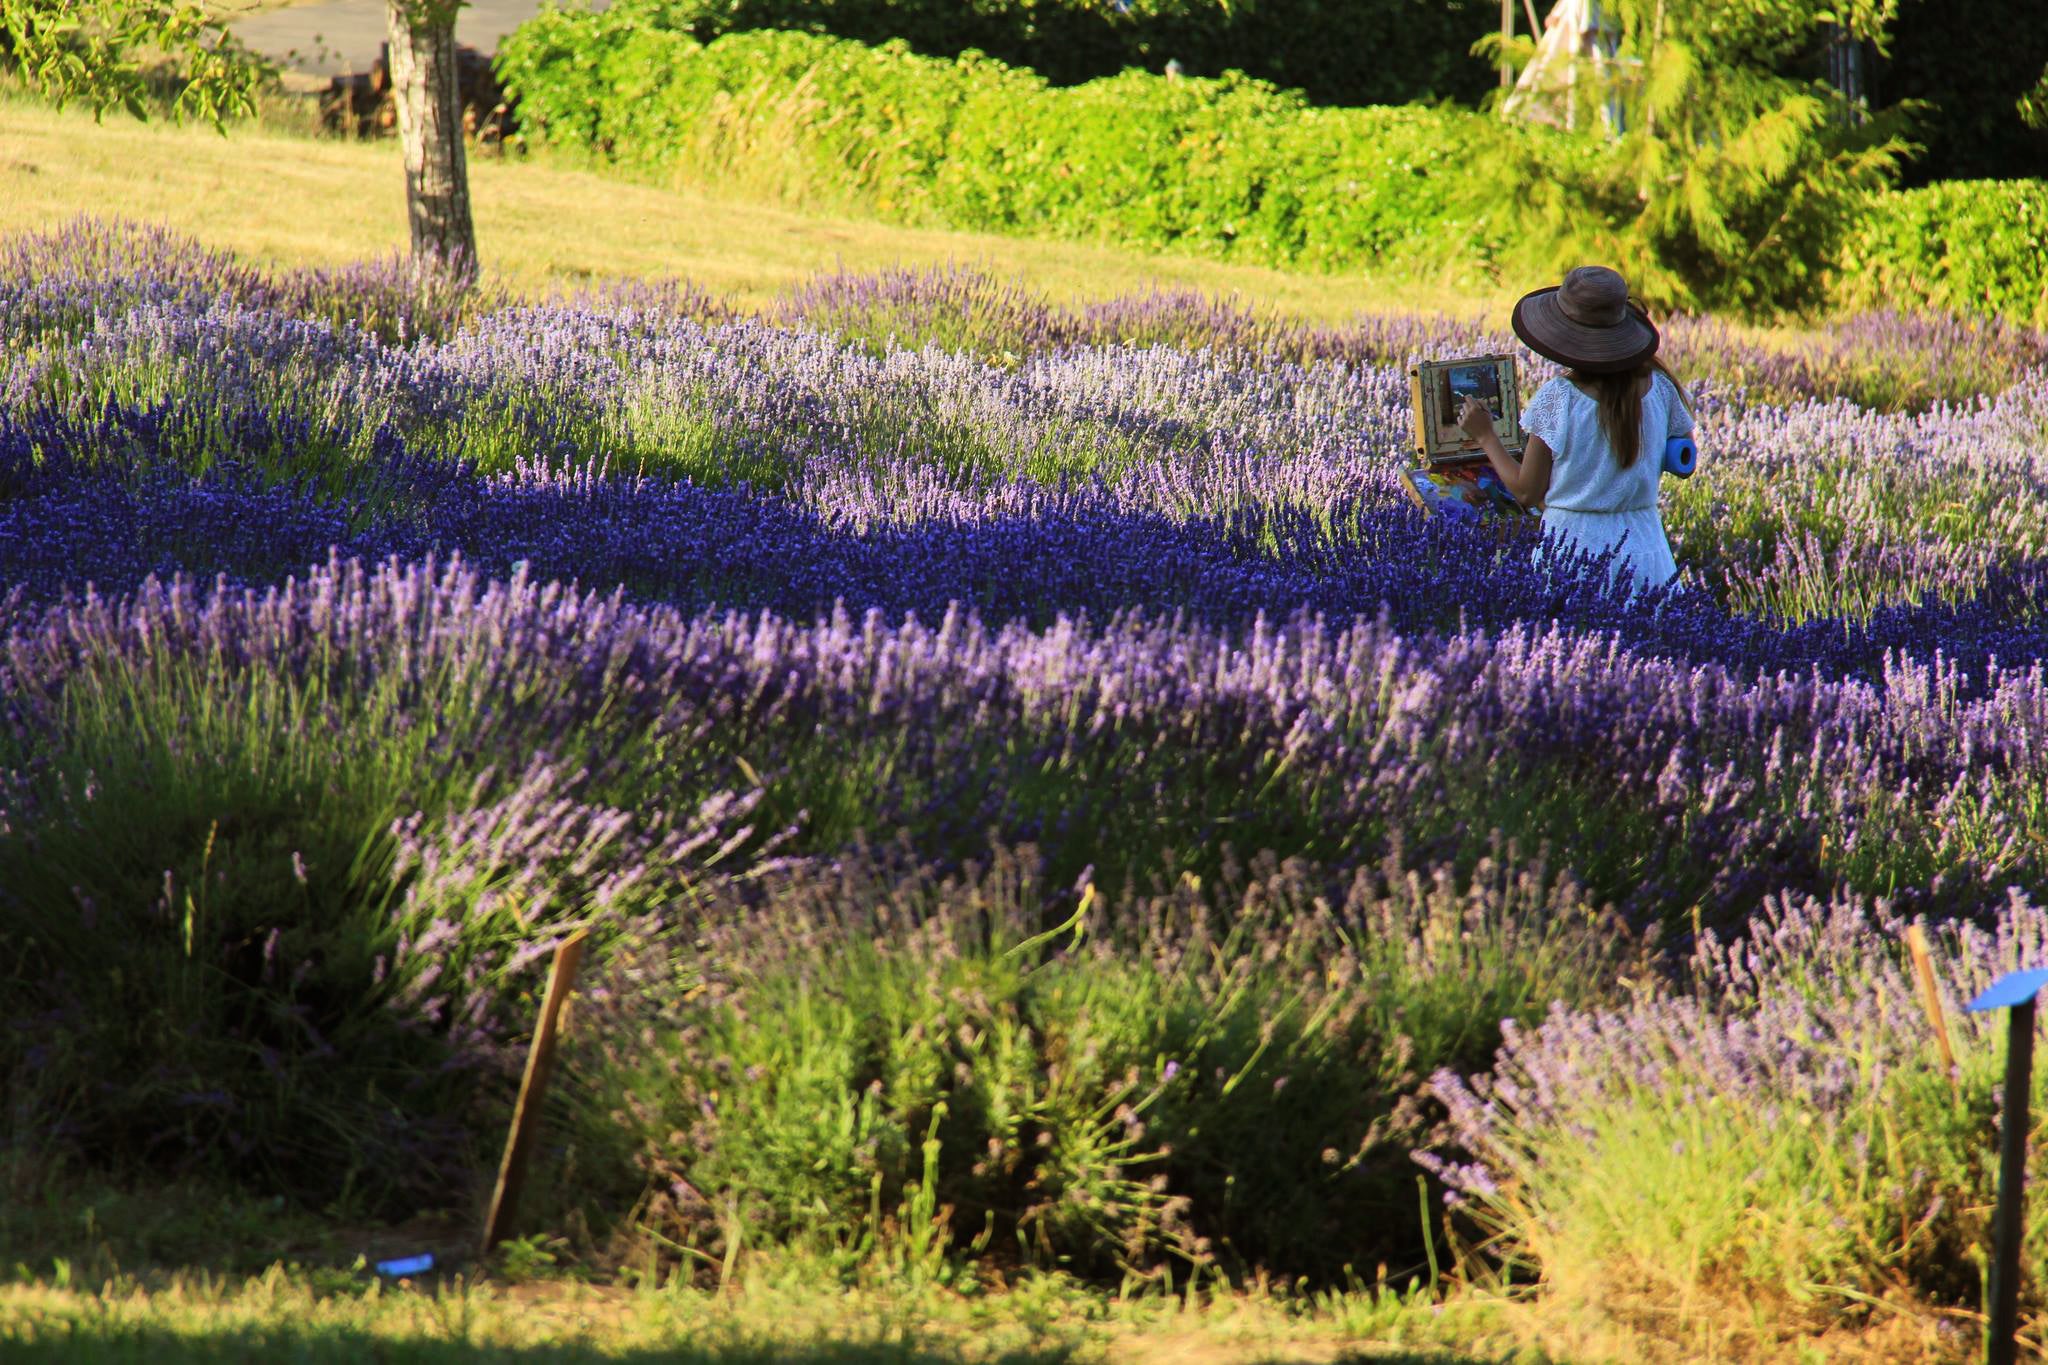 Artist Karen Whitworth painting lavender fields of purple flowers in a peaceful landscape  en Plein Air.